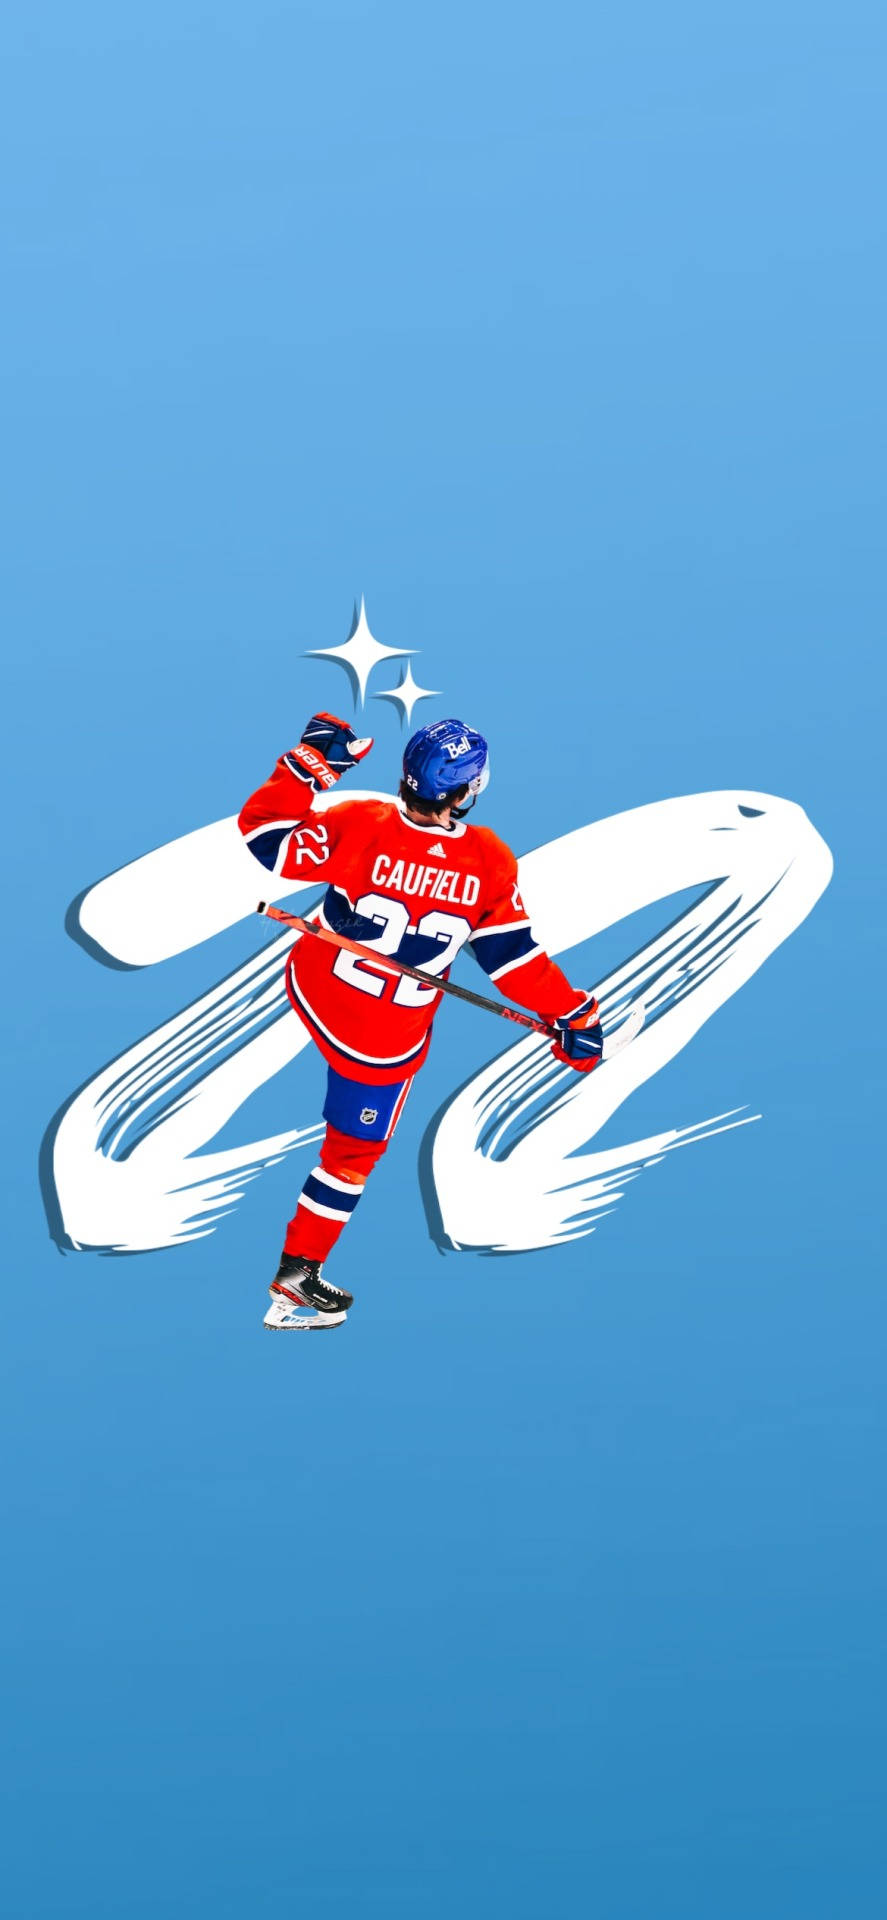 Colecaufield Montreal Canadiens Nummer 22-spelare. Wallpaper